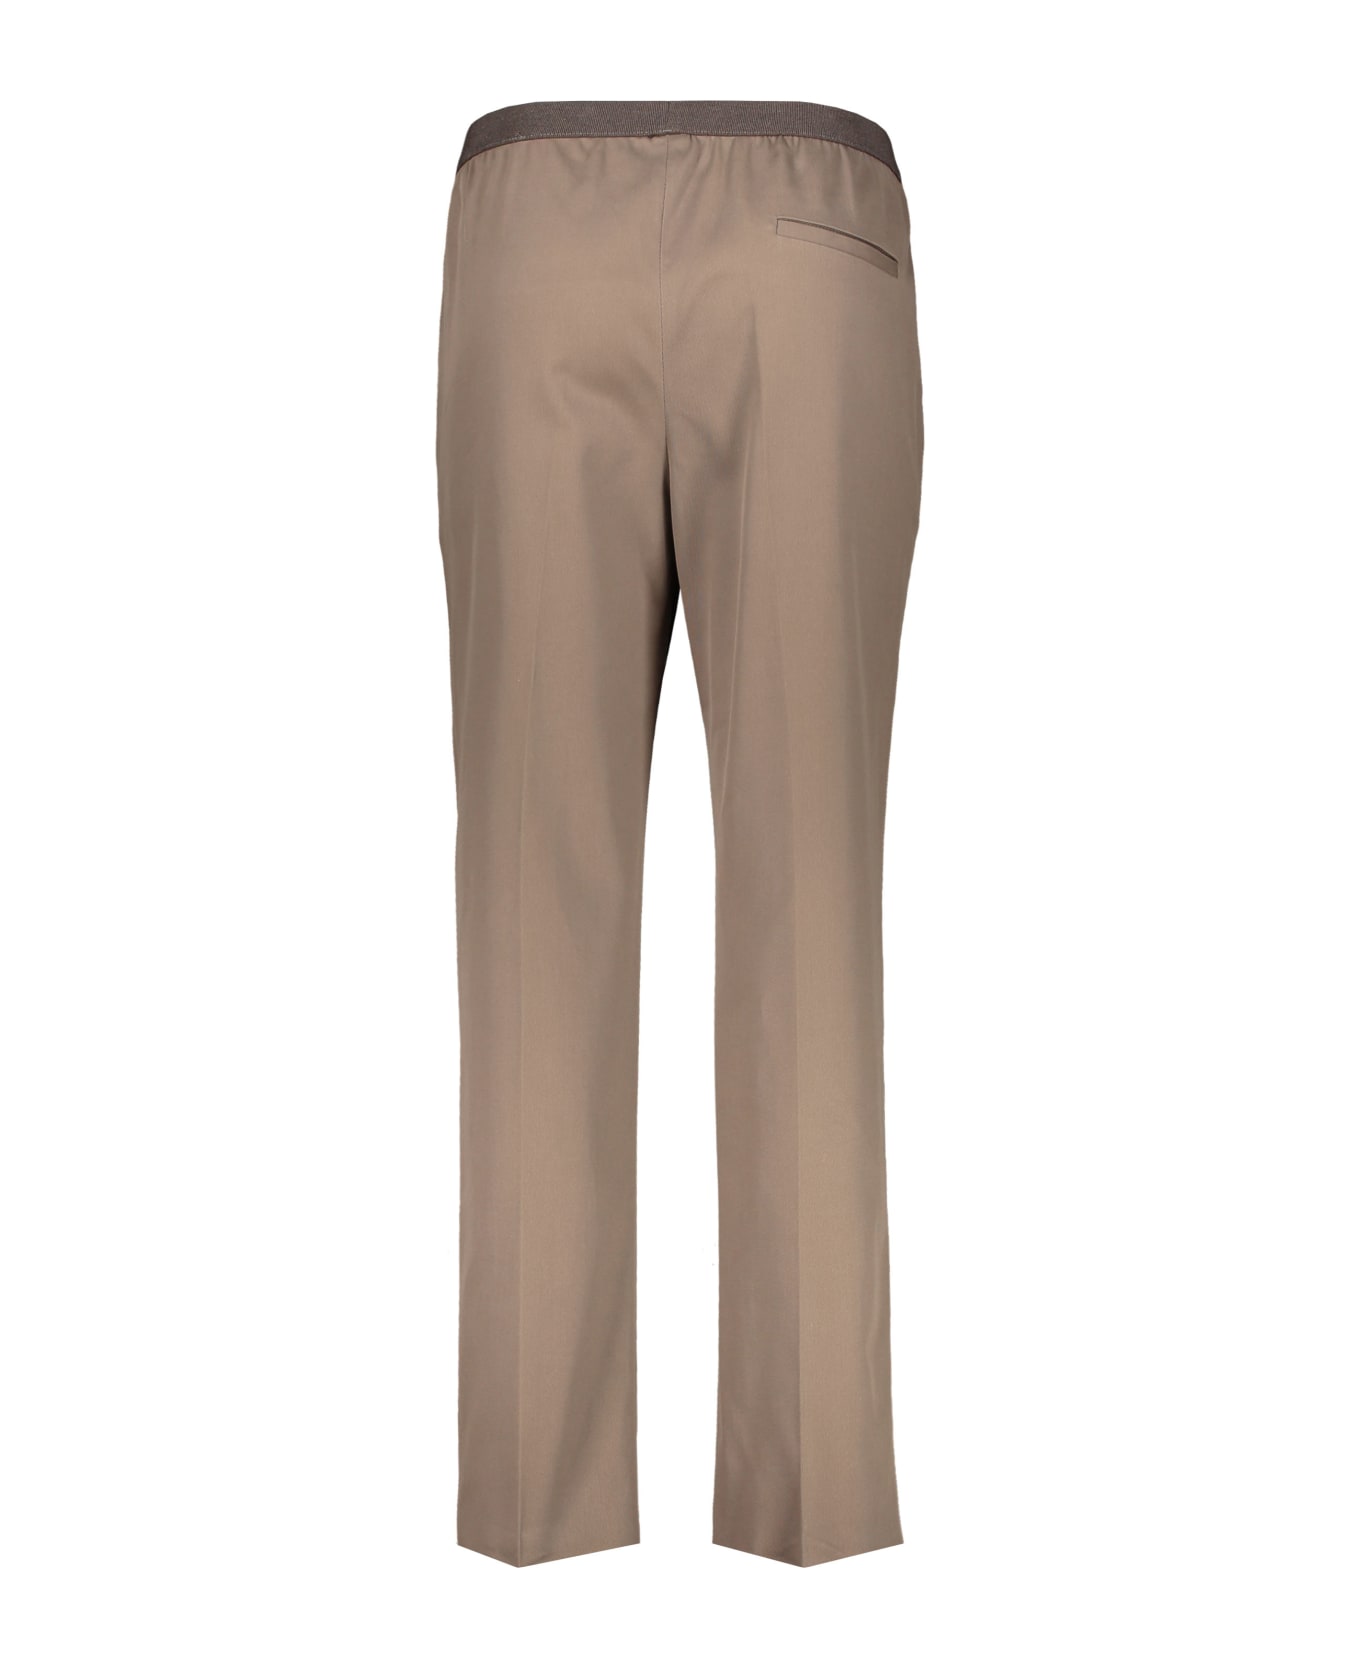 Agnona Cotton Trousers - brown ボトムス